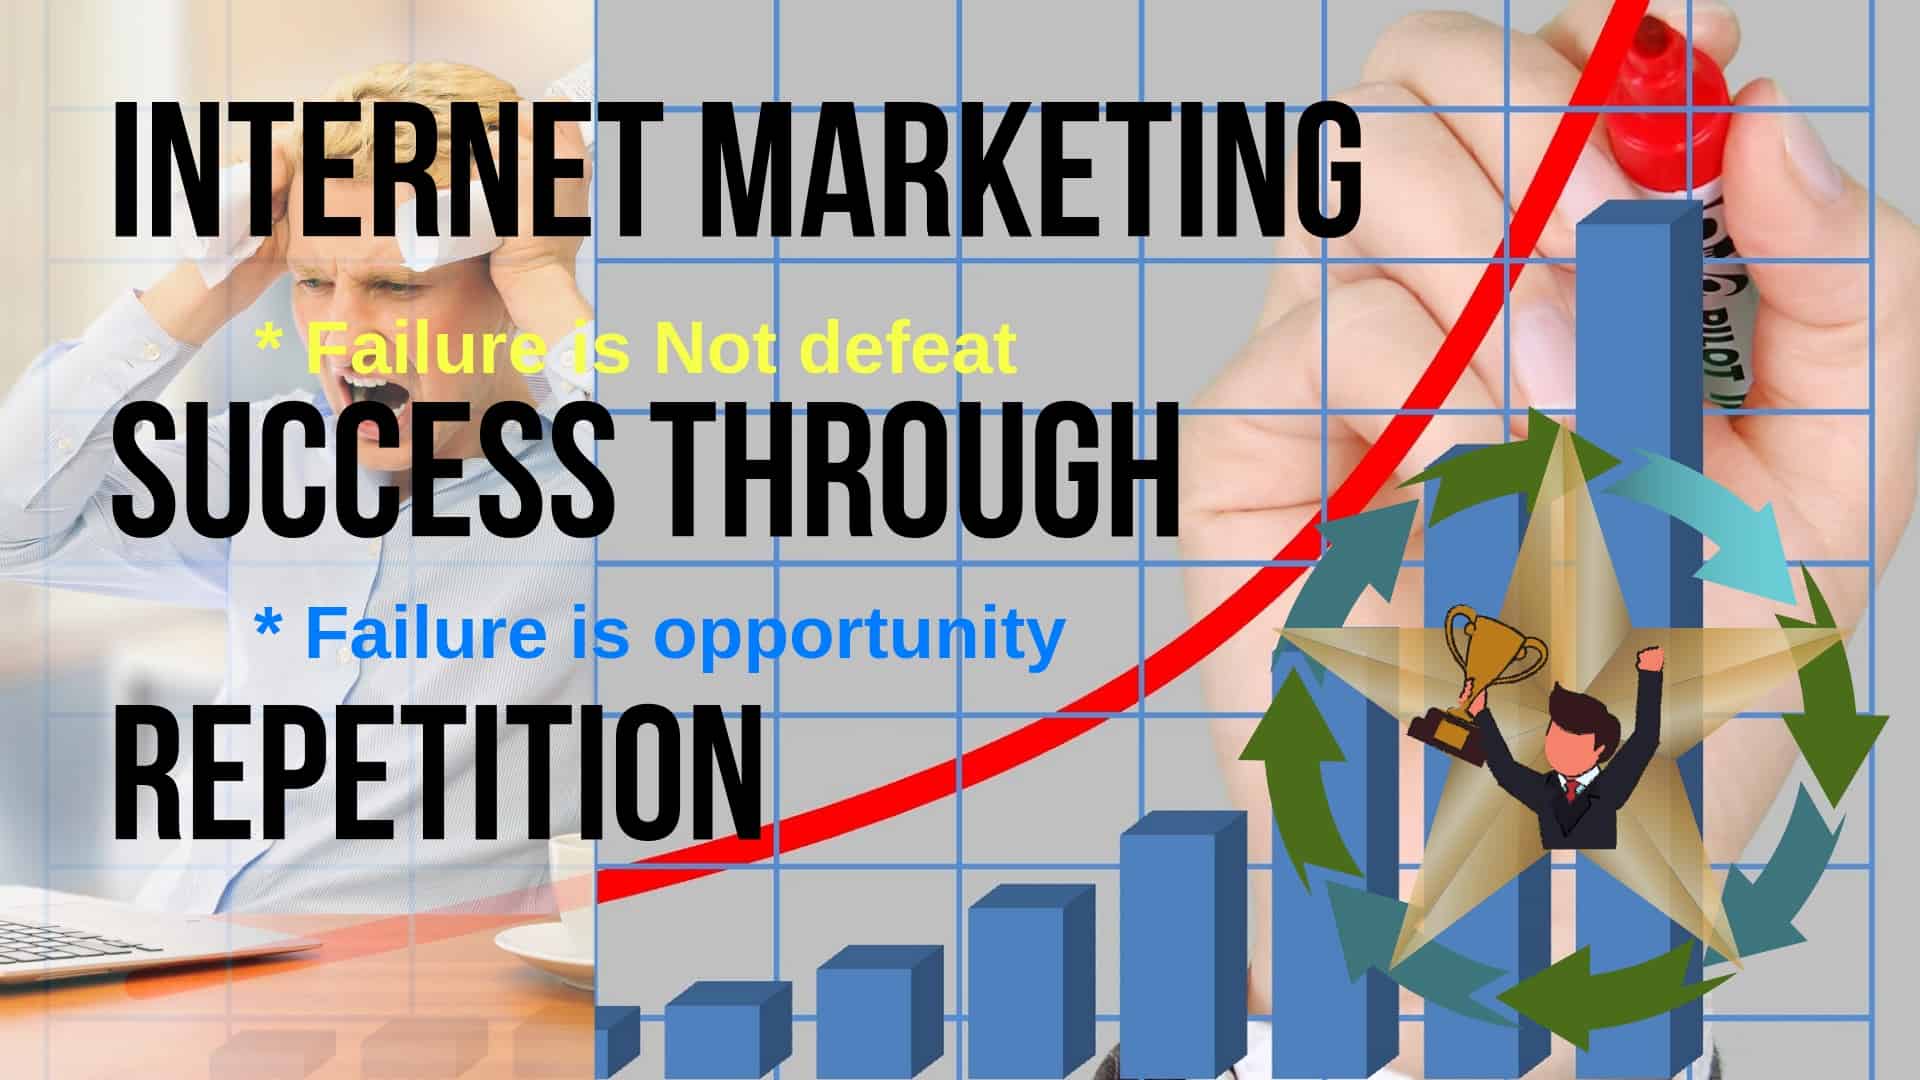 Internet marketing success through repetition